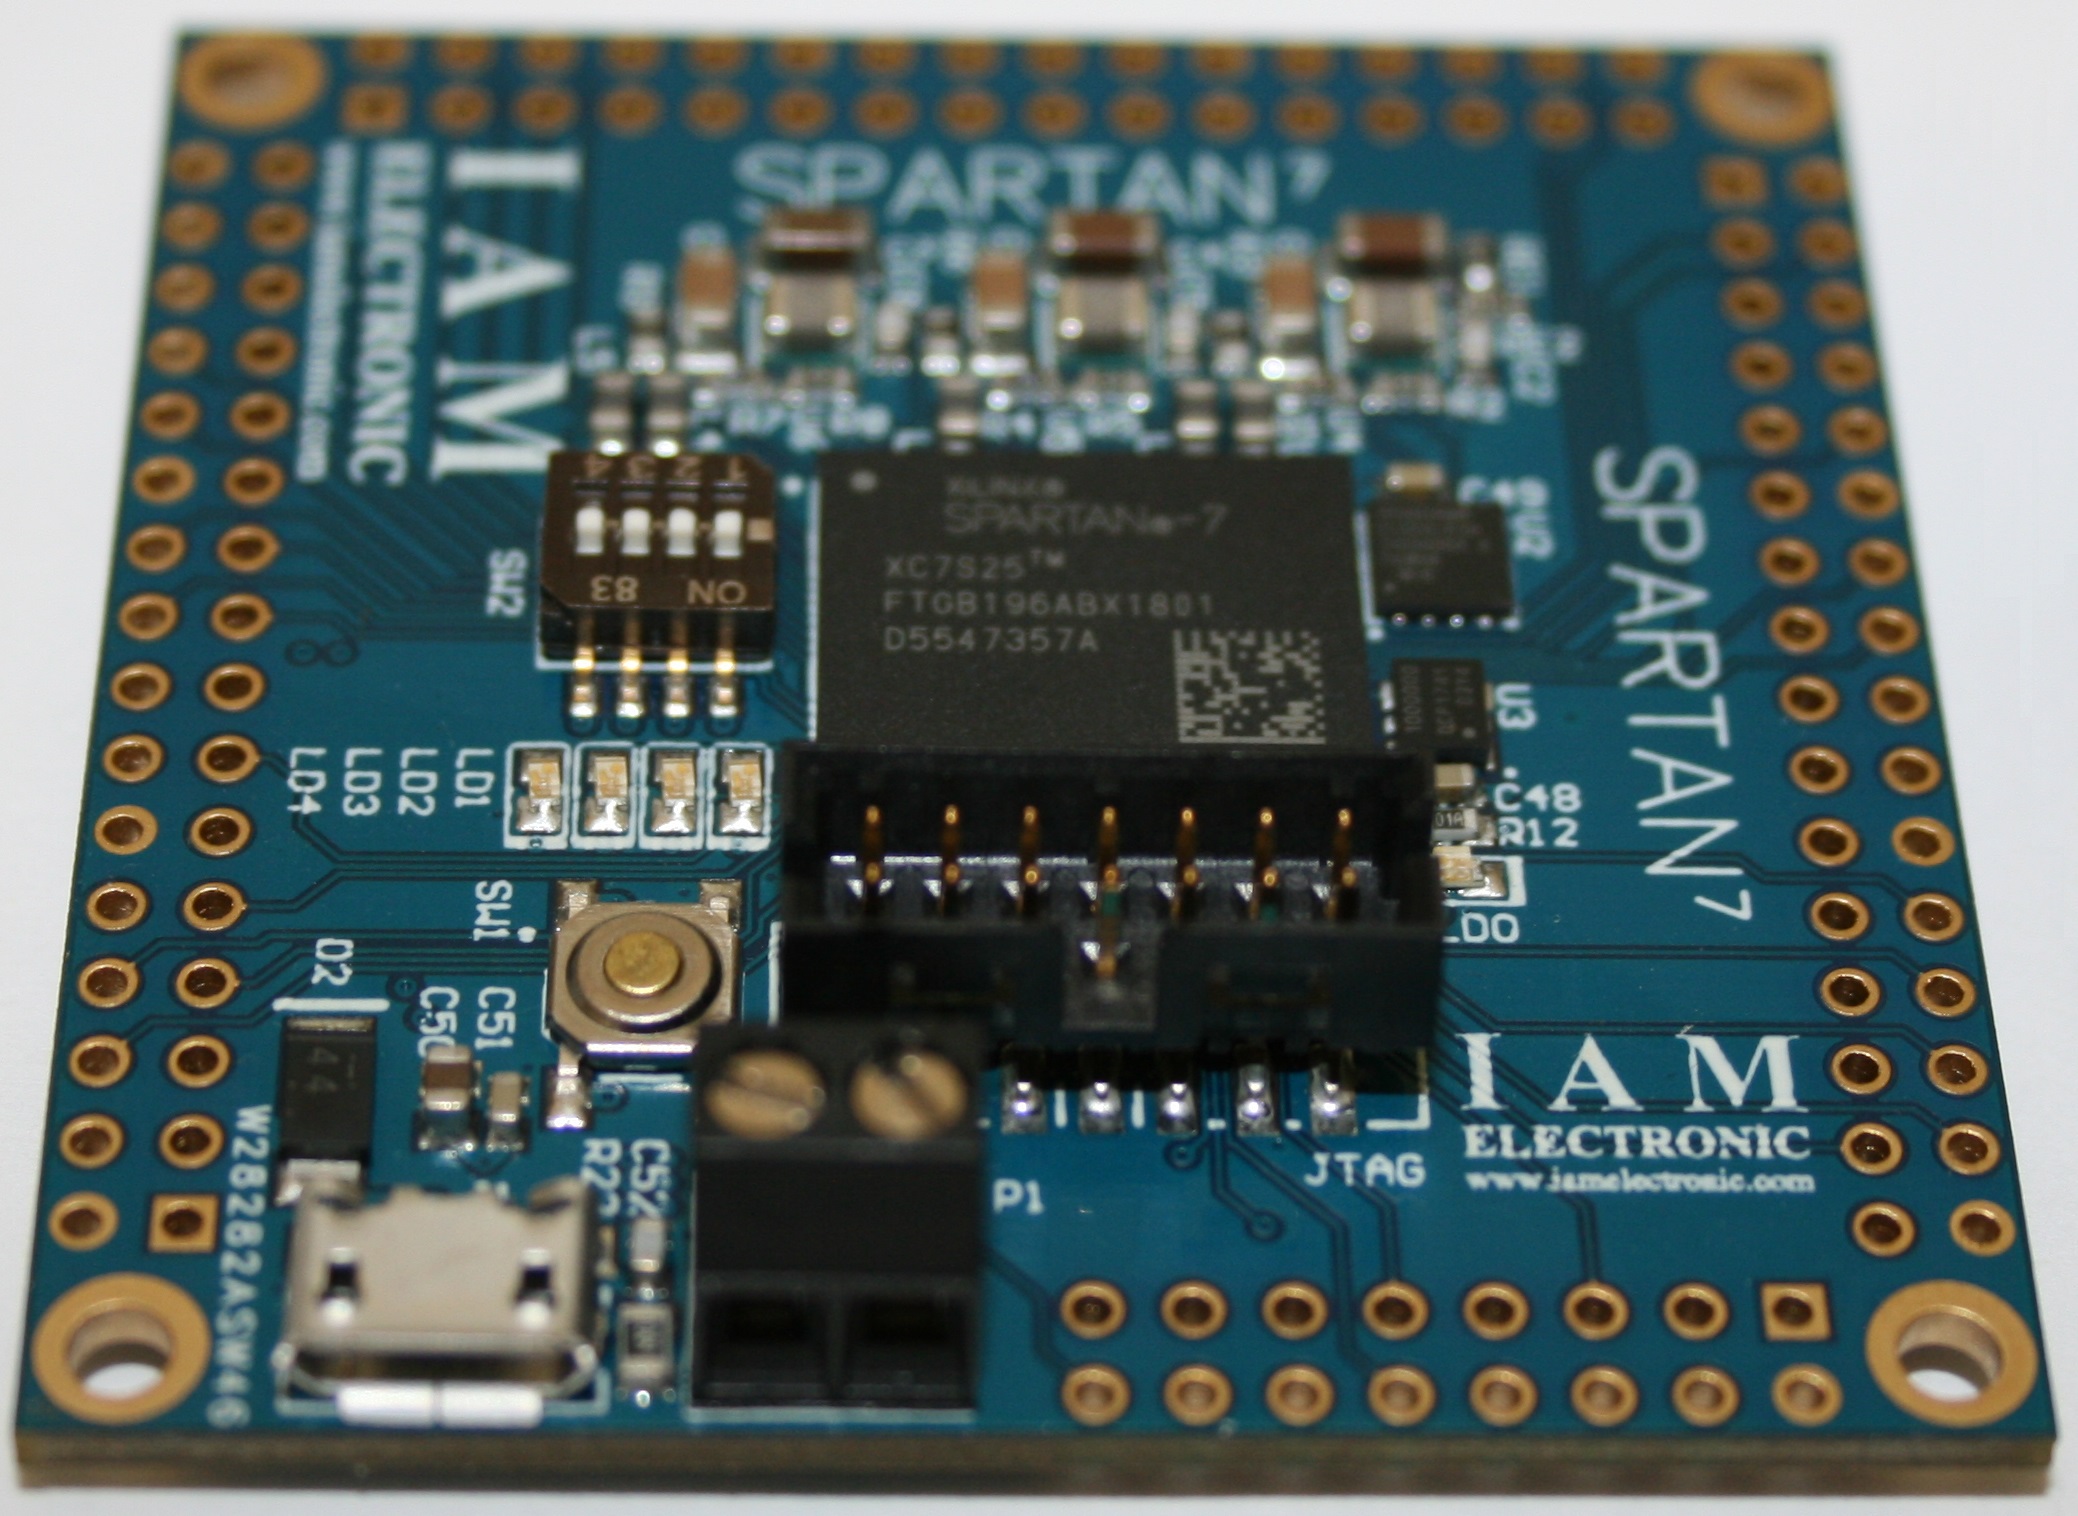 Spartan-7 FPGA module, JTAG connector